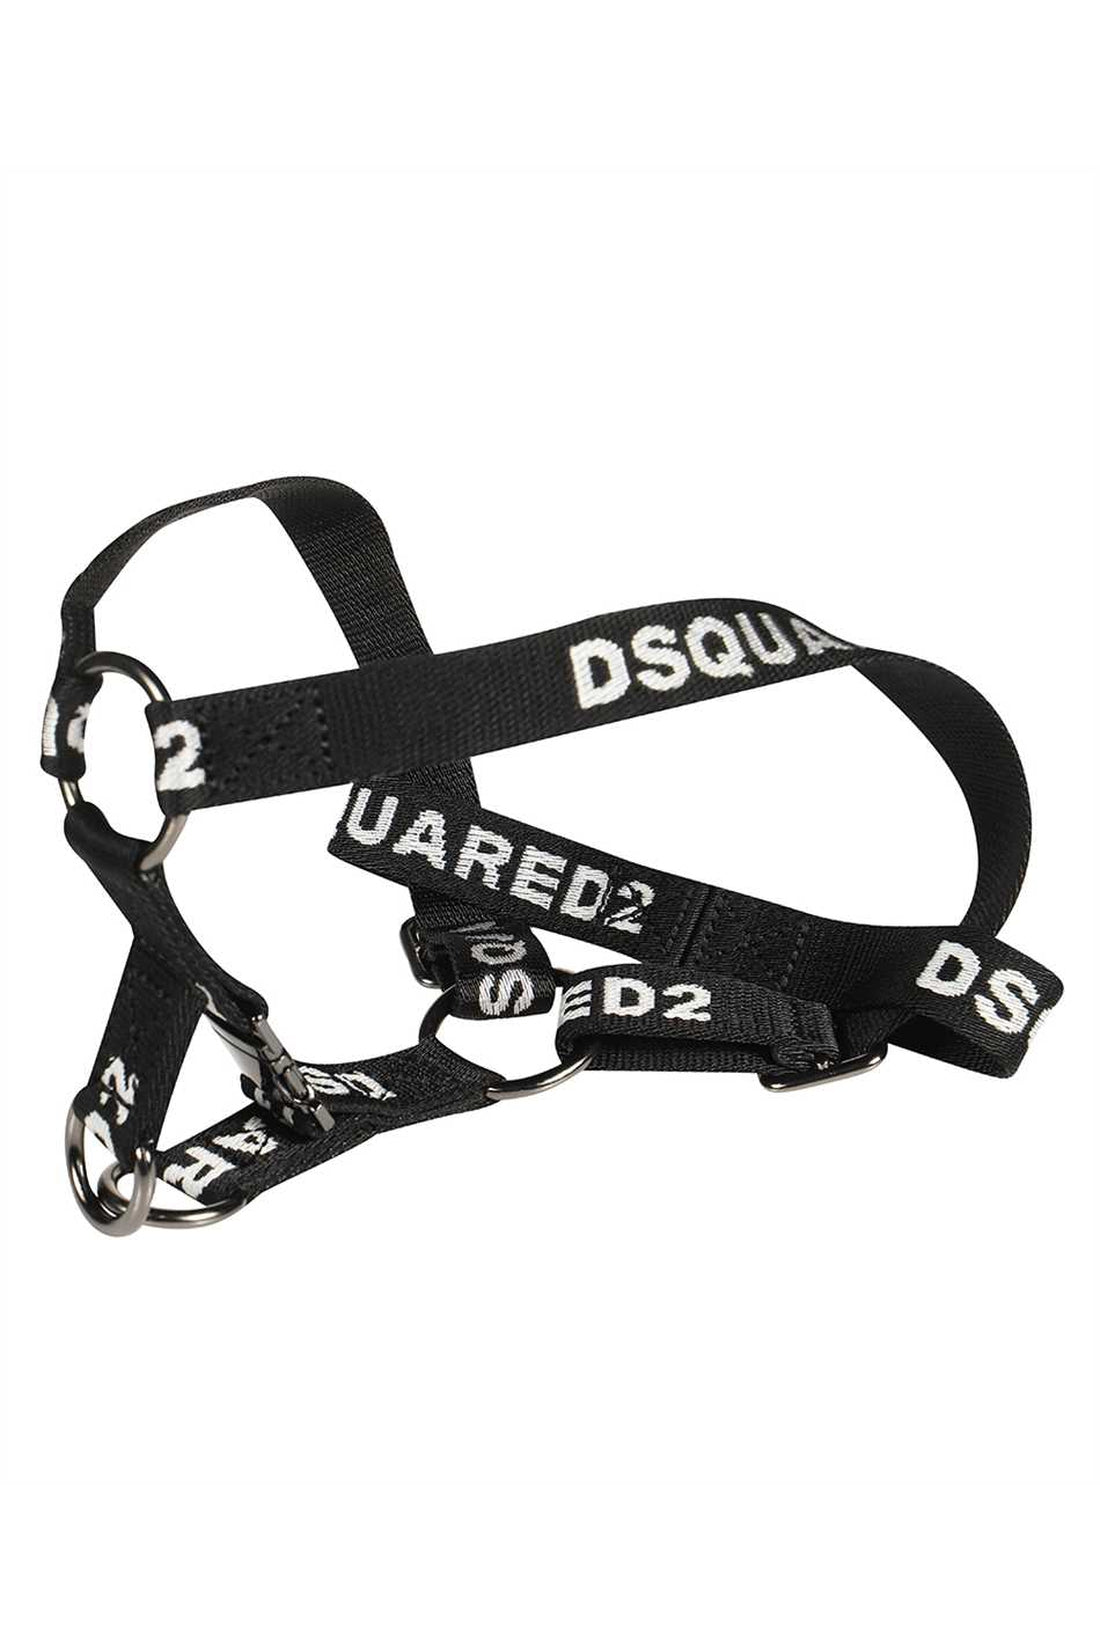 Dsquared2-OUTLET-SALE-Poldo x D2 - Logo printed harness-ARCHIVIST